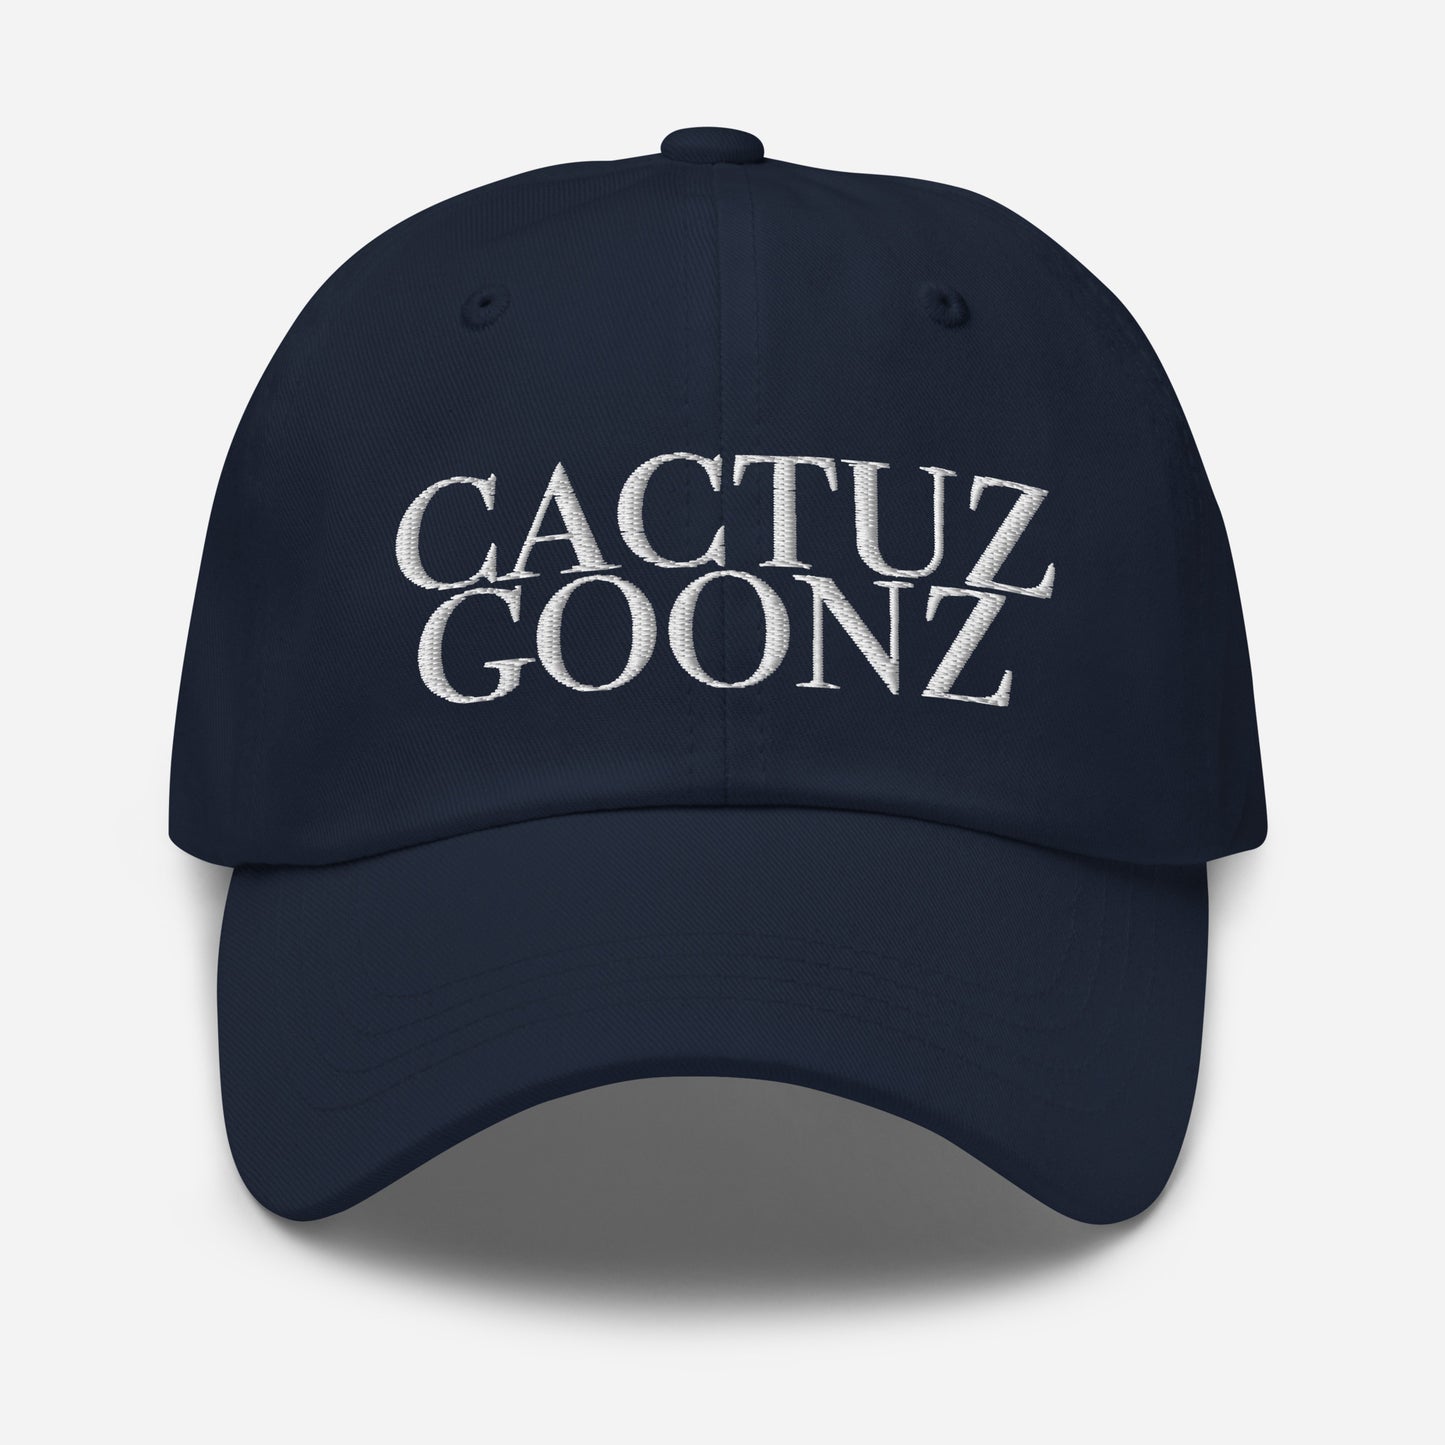 Cactuz Goonz Dad hat